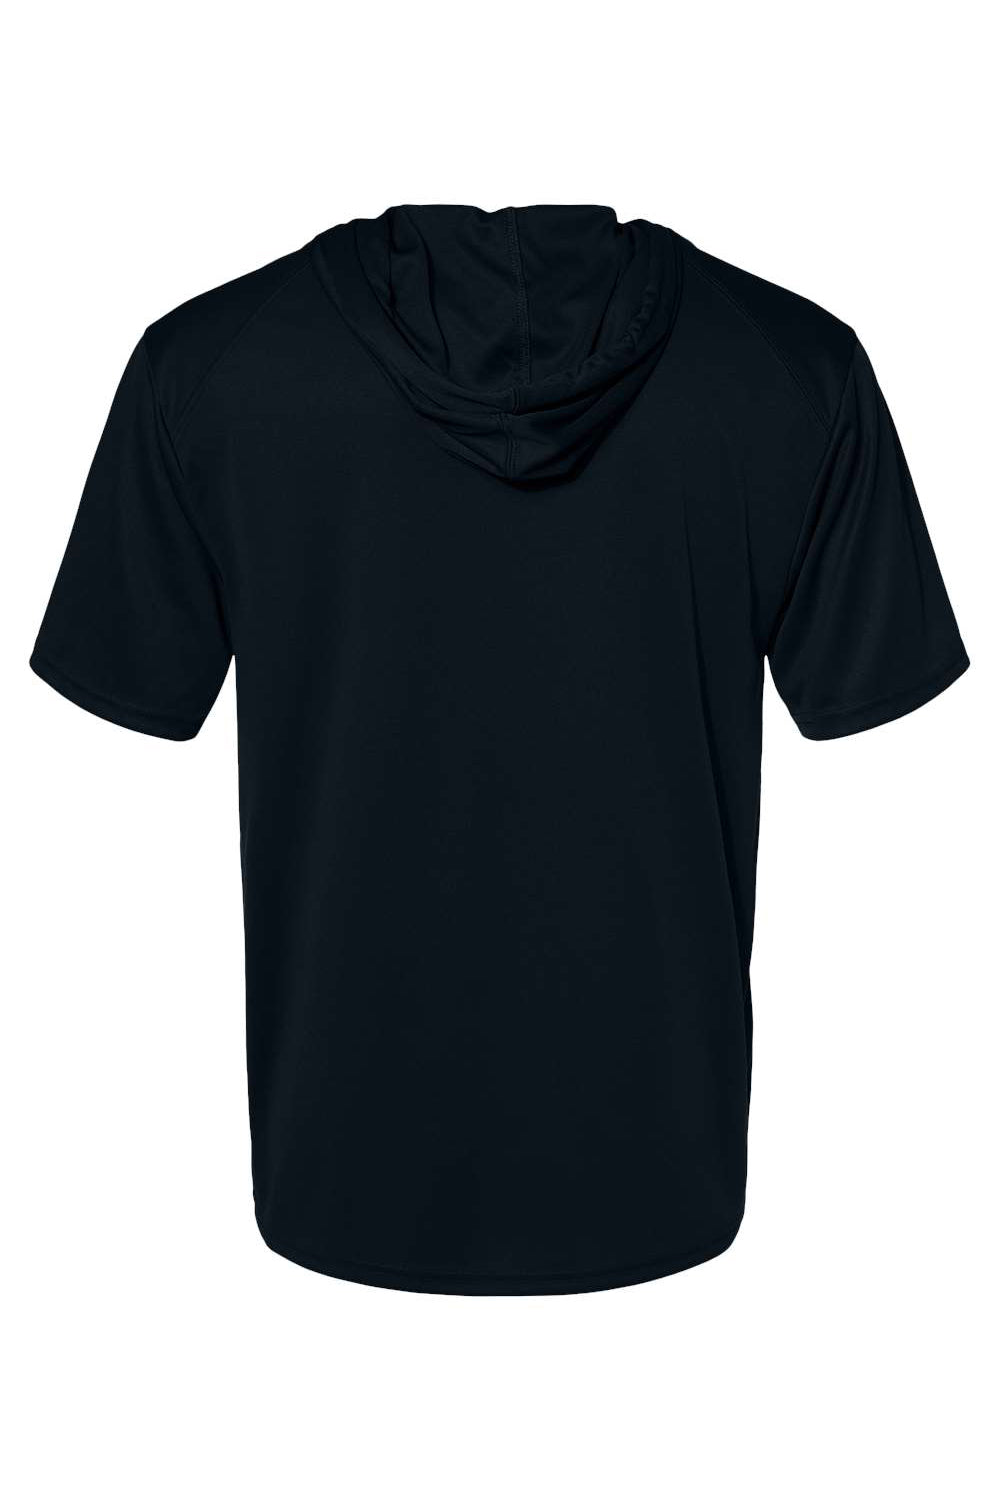 Badger 4123 Mens B-Core Moisture Wicking Hooded T-Shirt Hoodie Black Flat Back